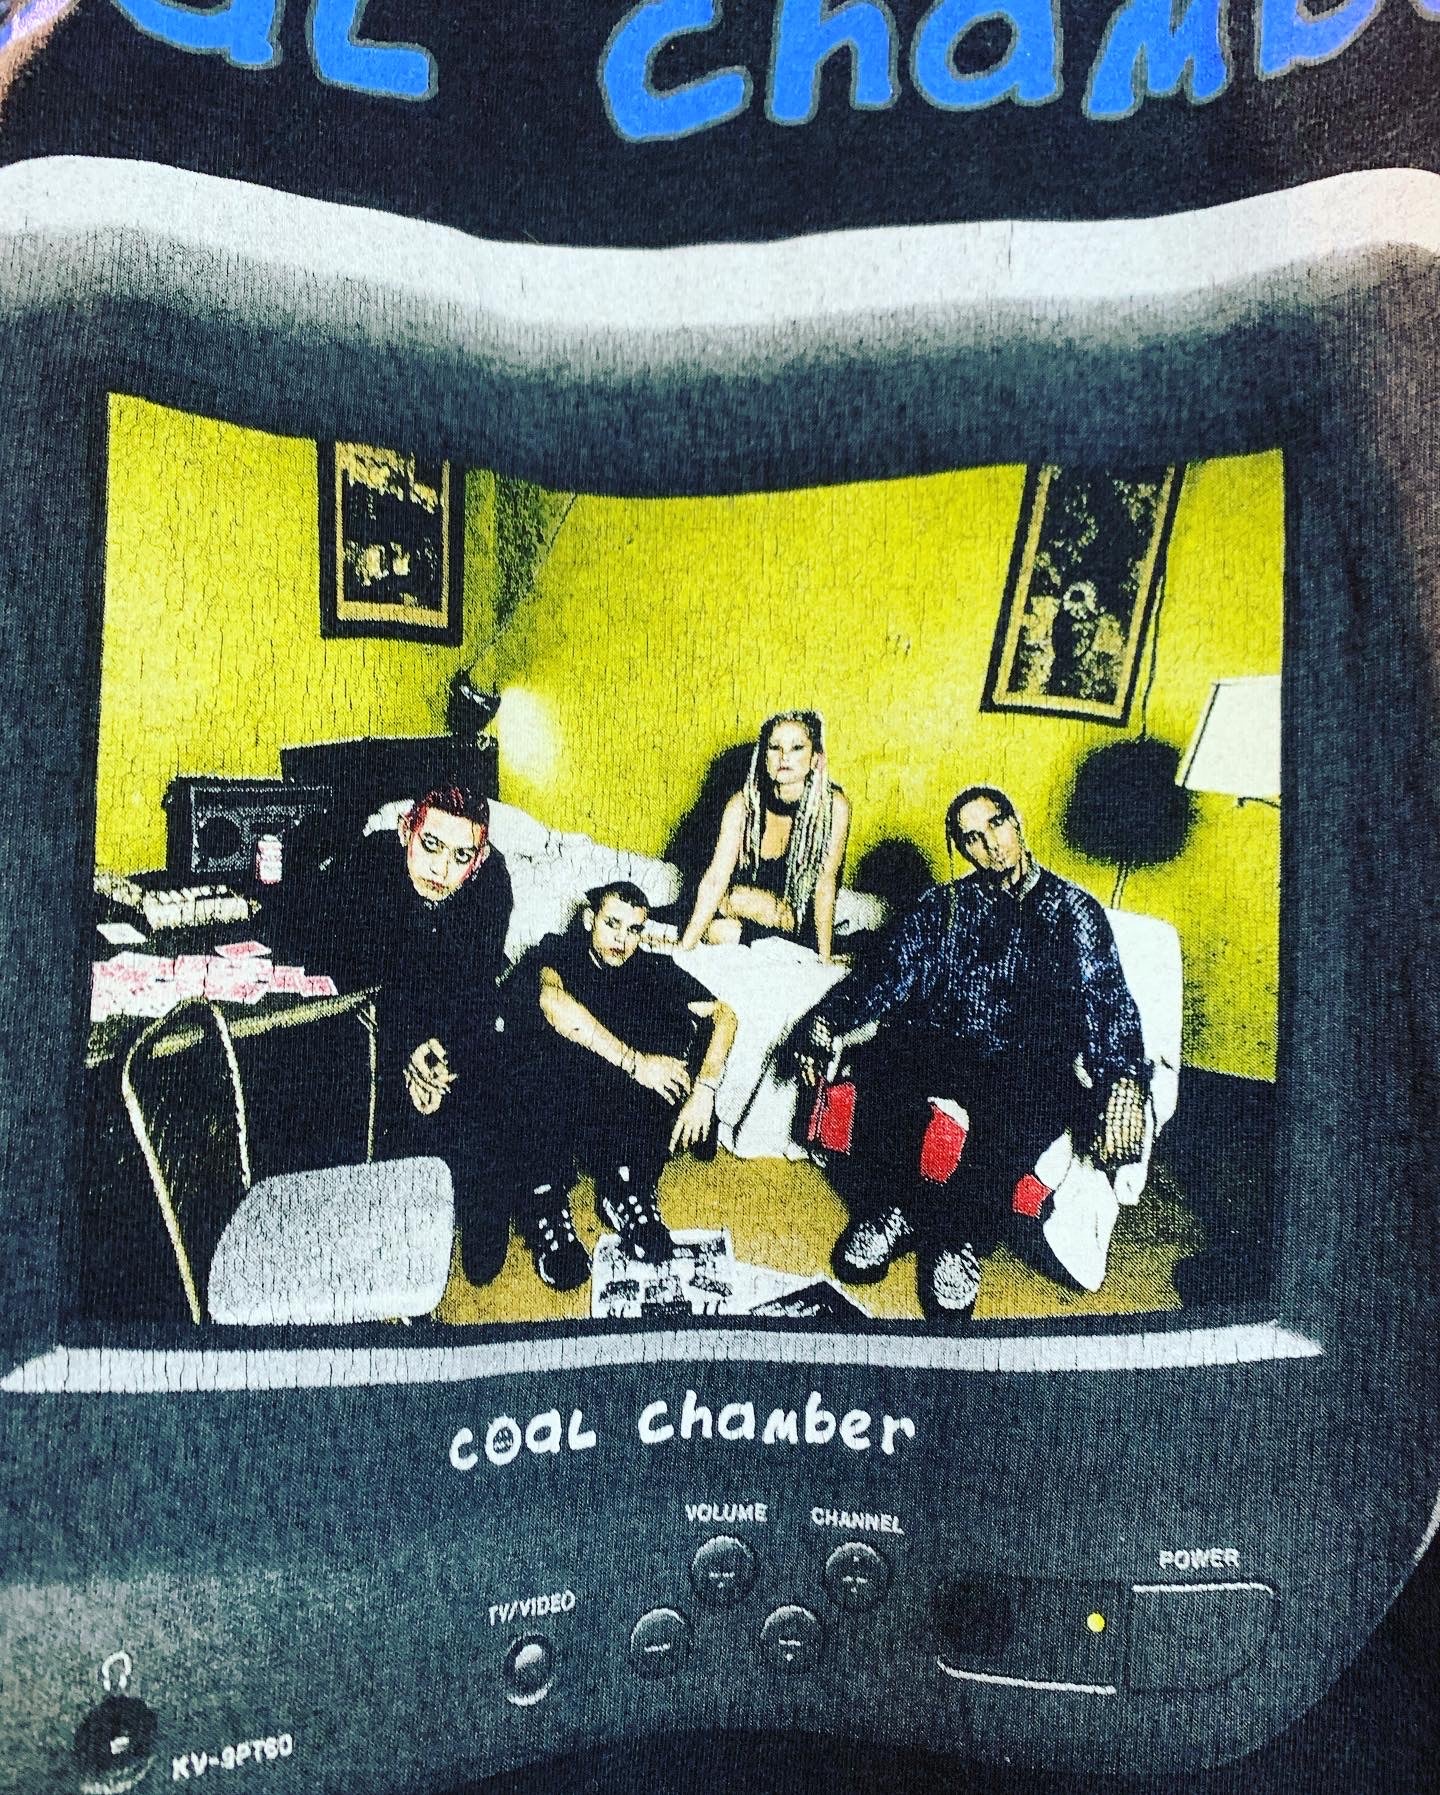 Coal chamber 1998